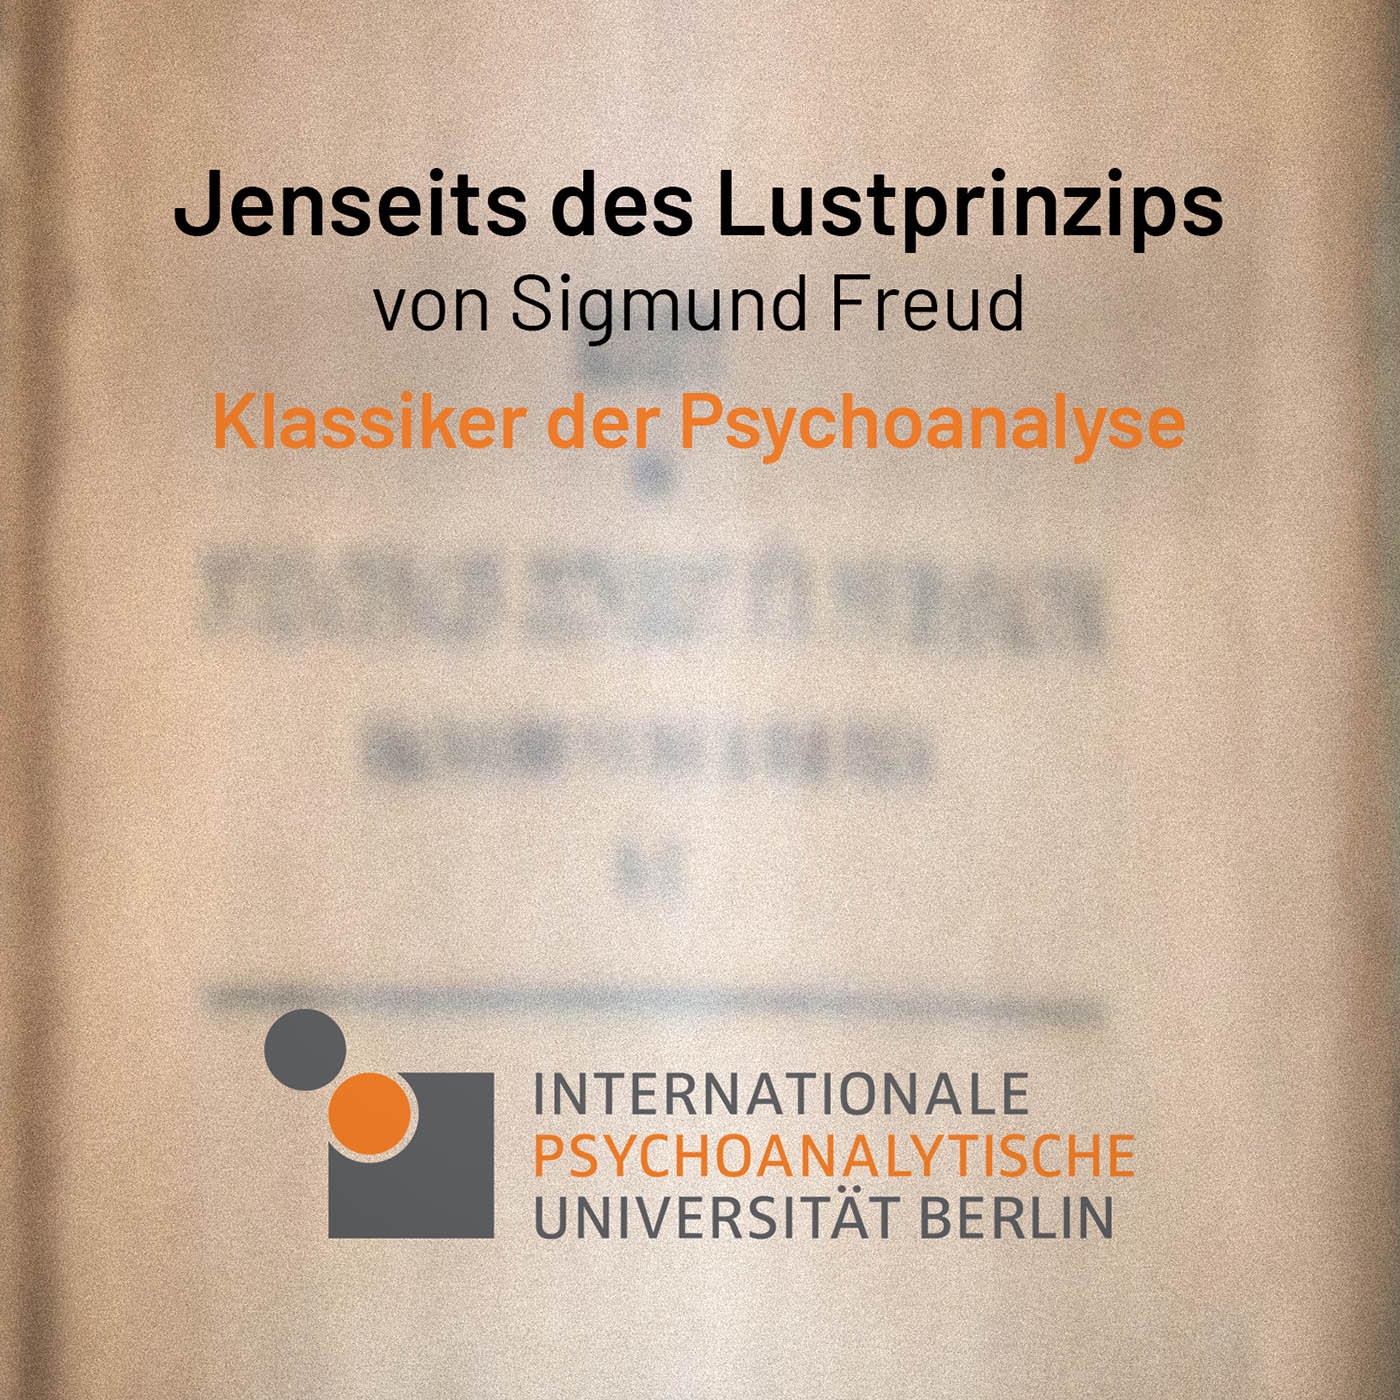 Klassiker der Psychoanalyse: Jenseits des Lustprinzips (Teil 3)